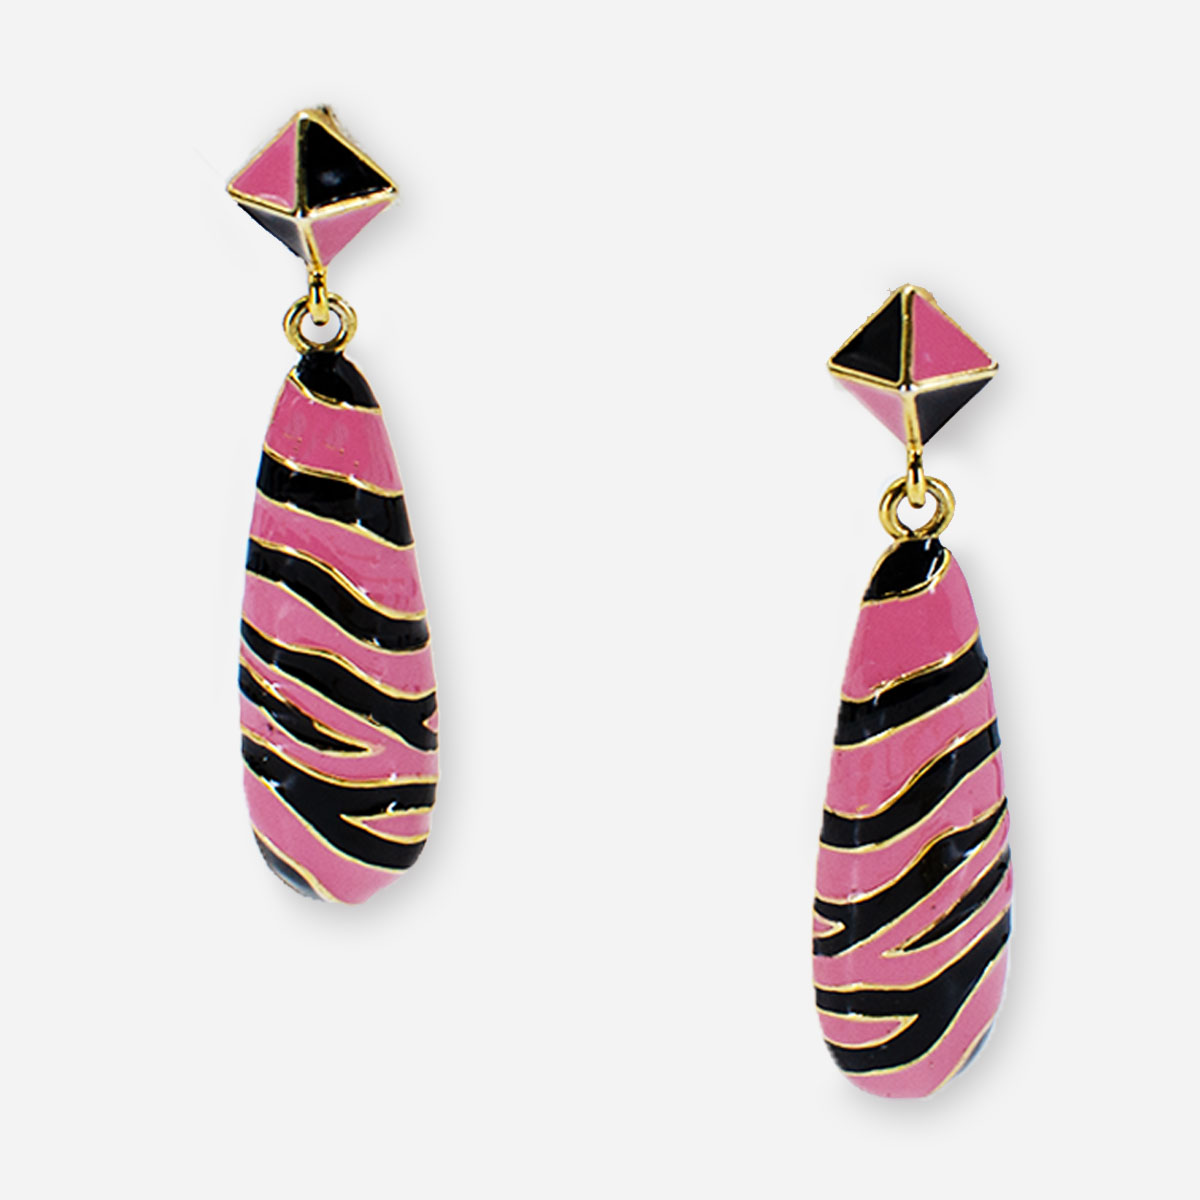 Kenneth Jay Lane pink tiger earrings